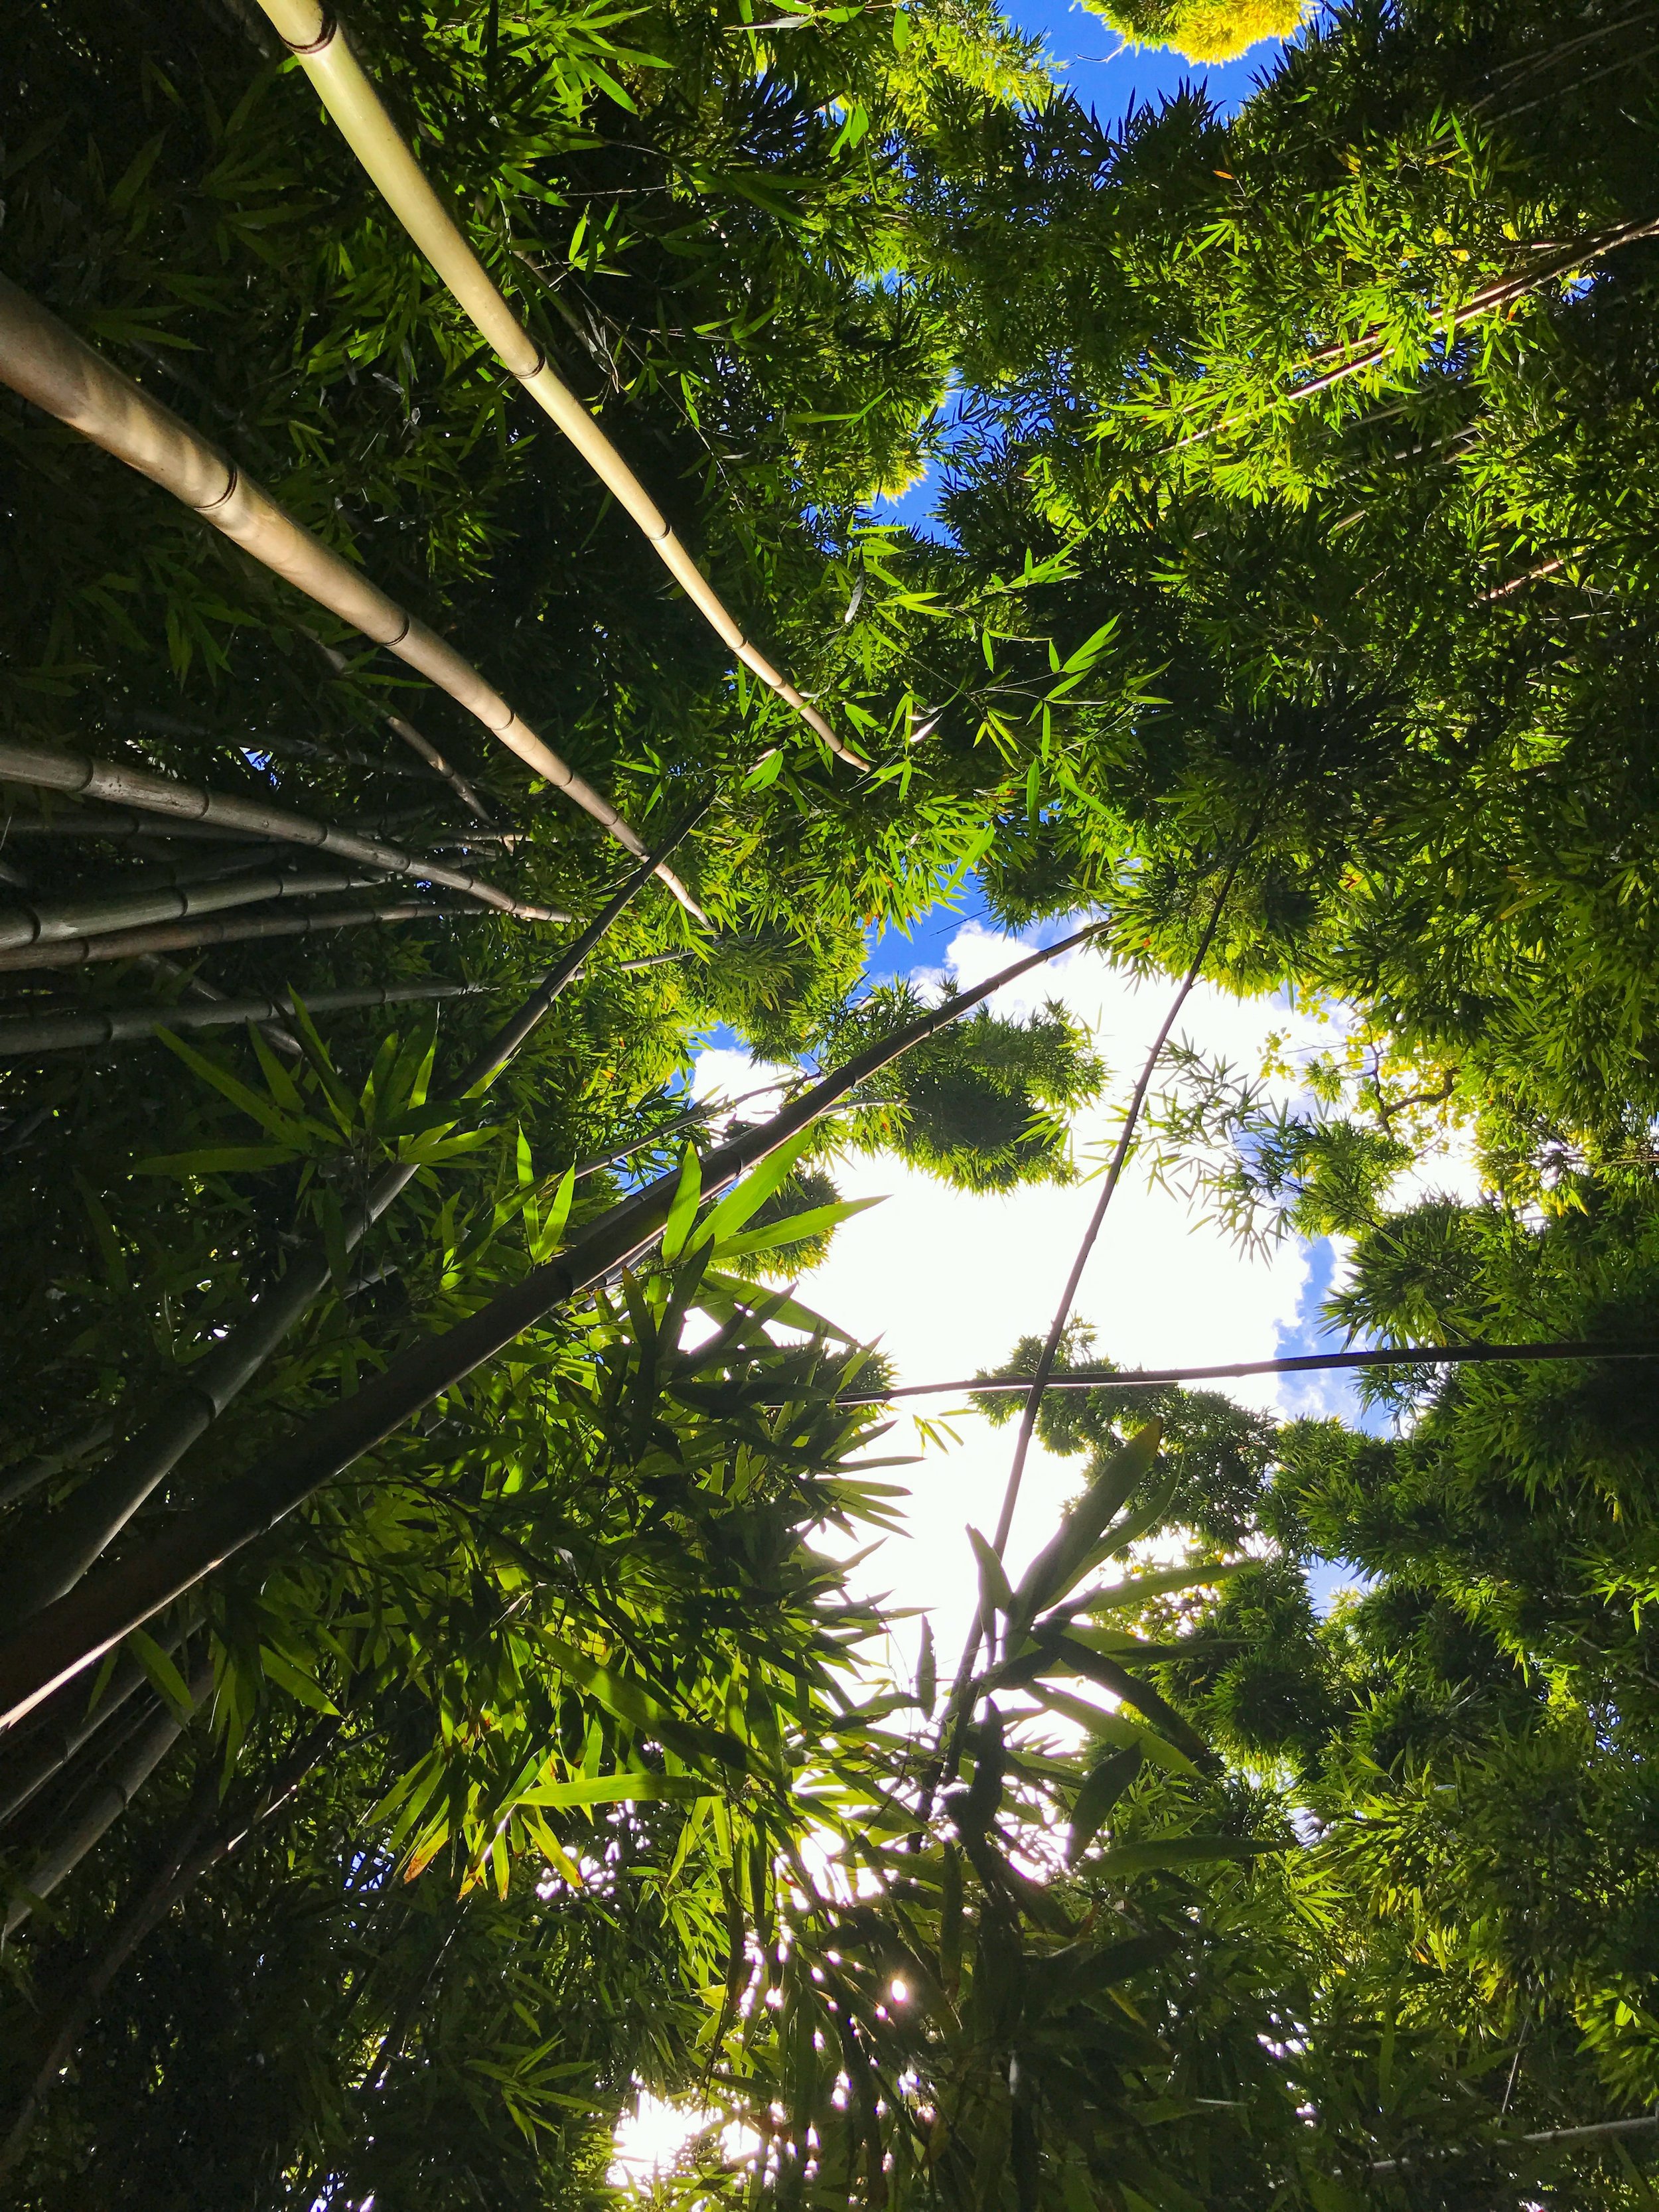 Pipiwai Trail Bamboo Forest - Road to Hana - Maui Hawaii (Copy)